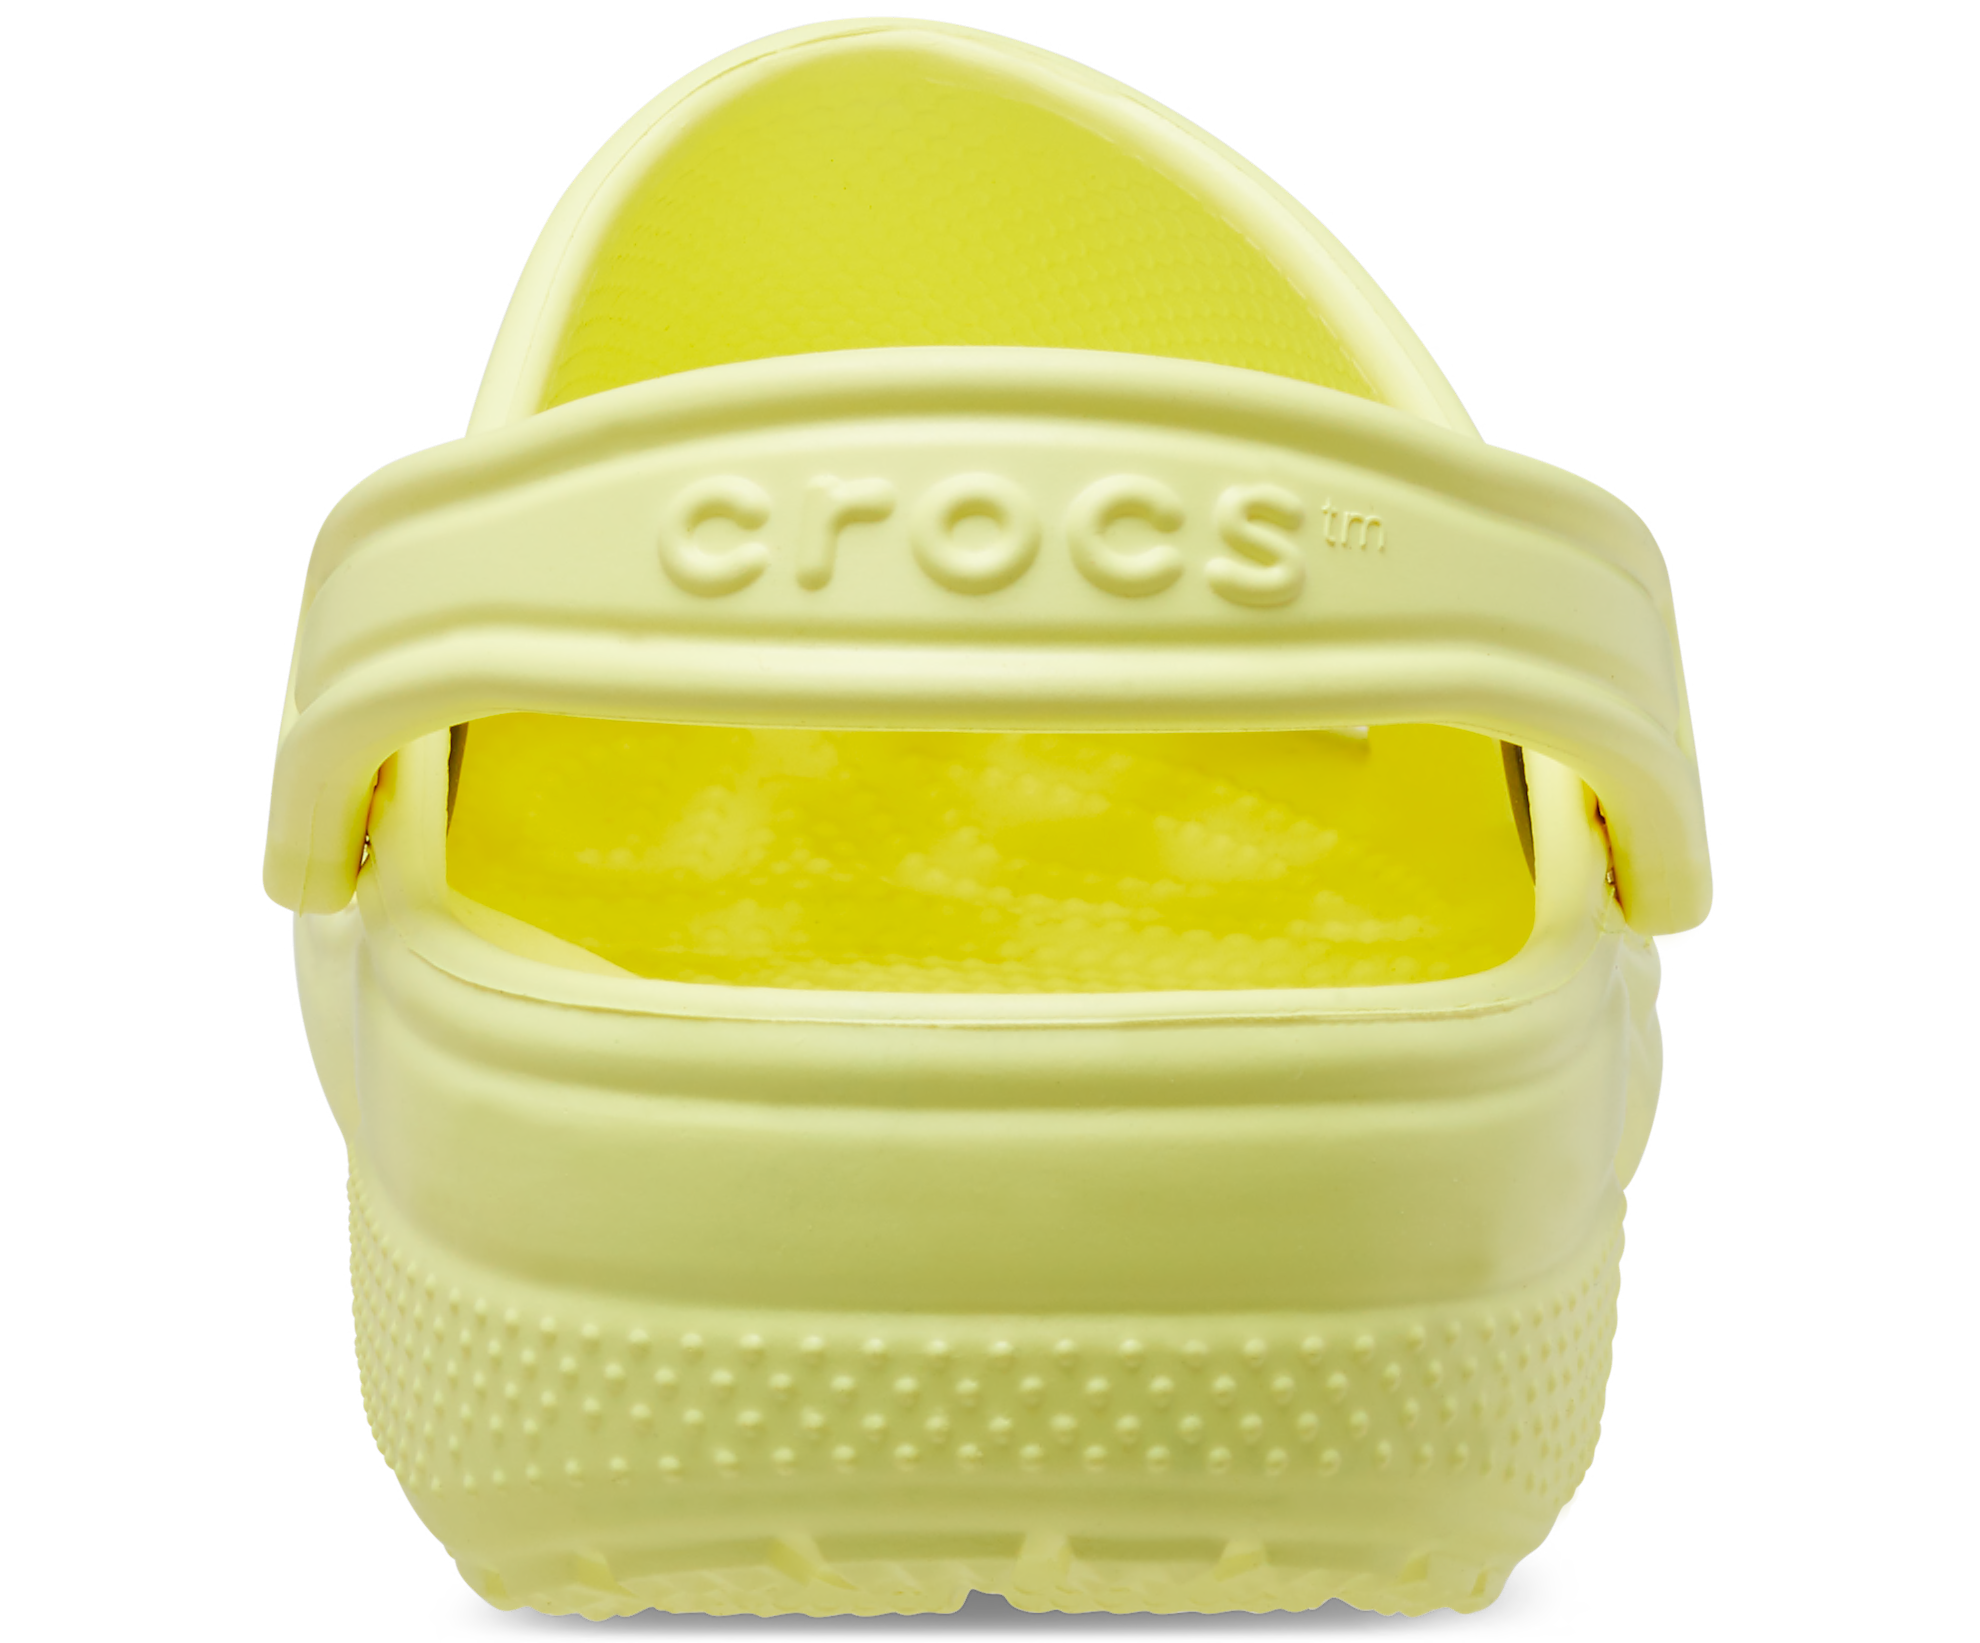 Crocs Classic 10001-75Y Ladies Sunflower Clogs